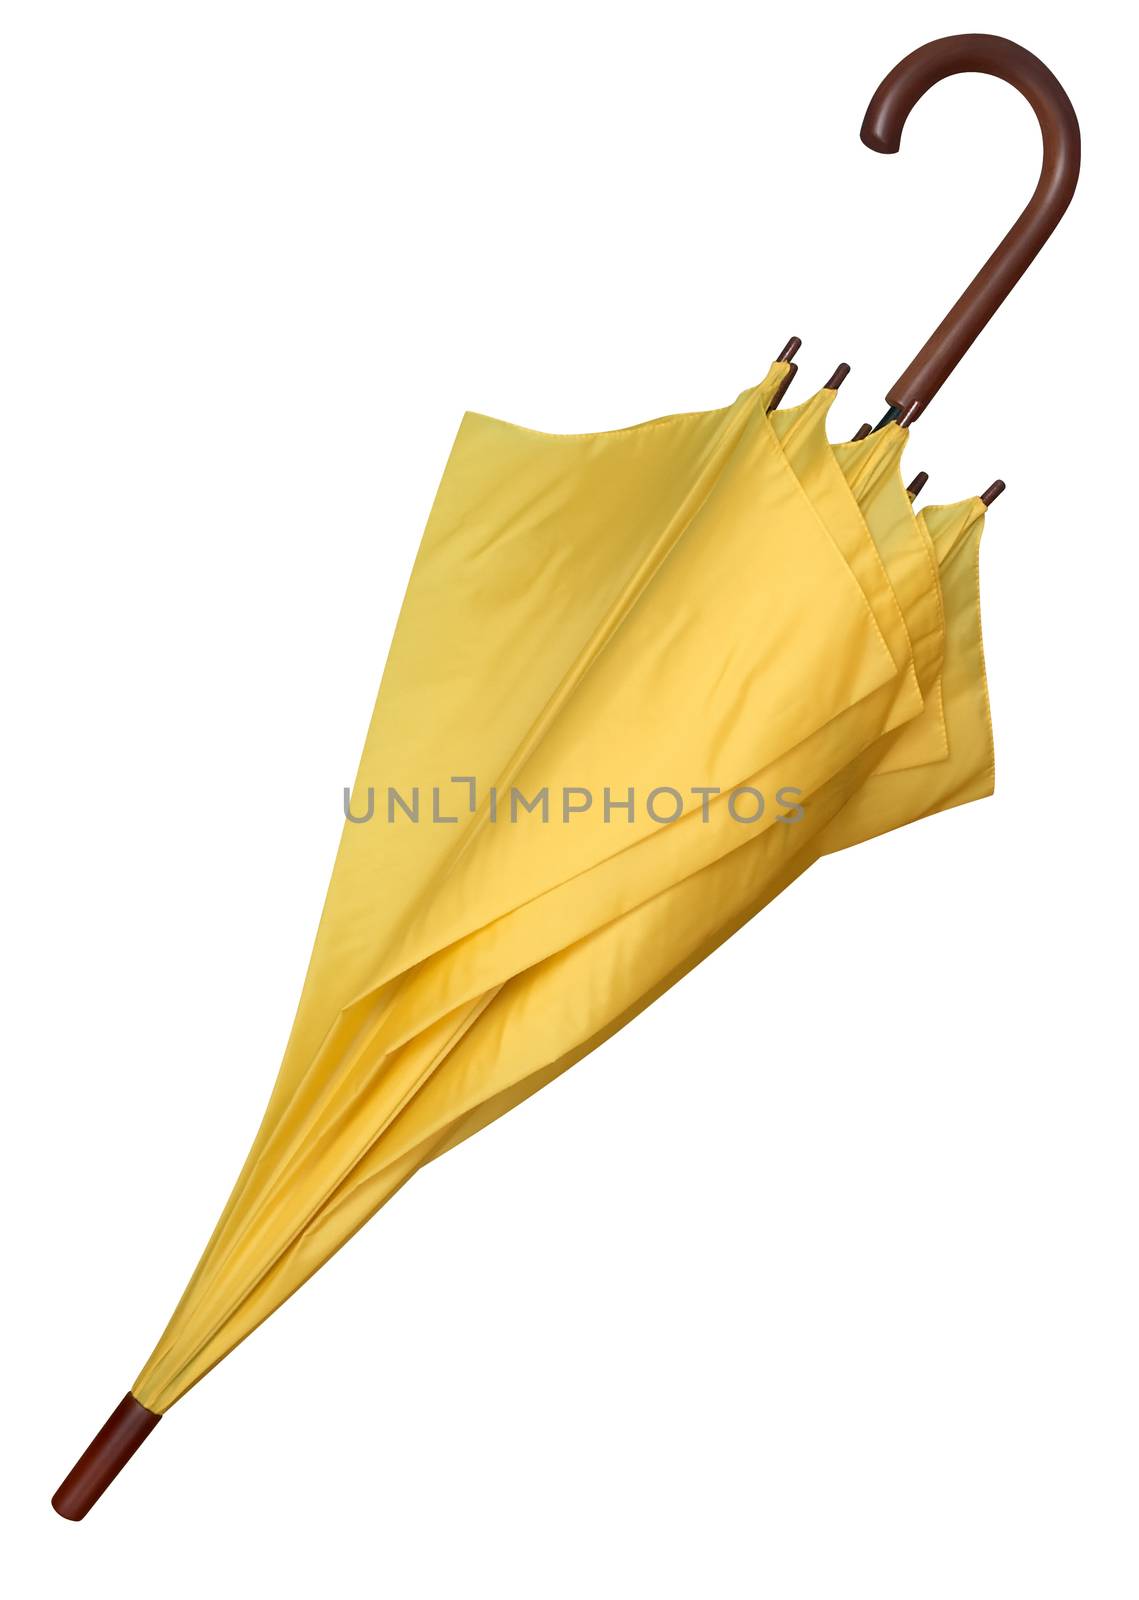 umbrella yellow closed by Venakr